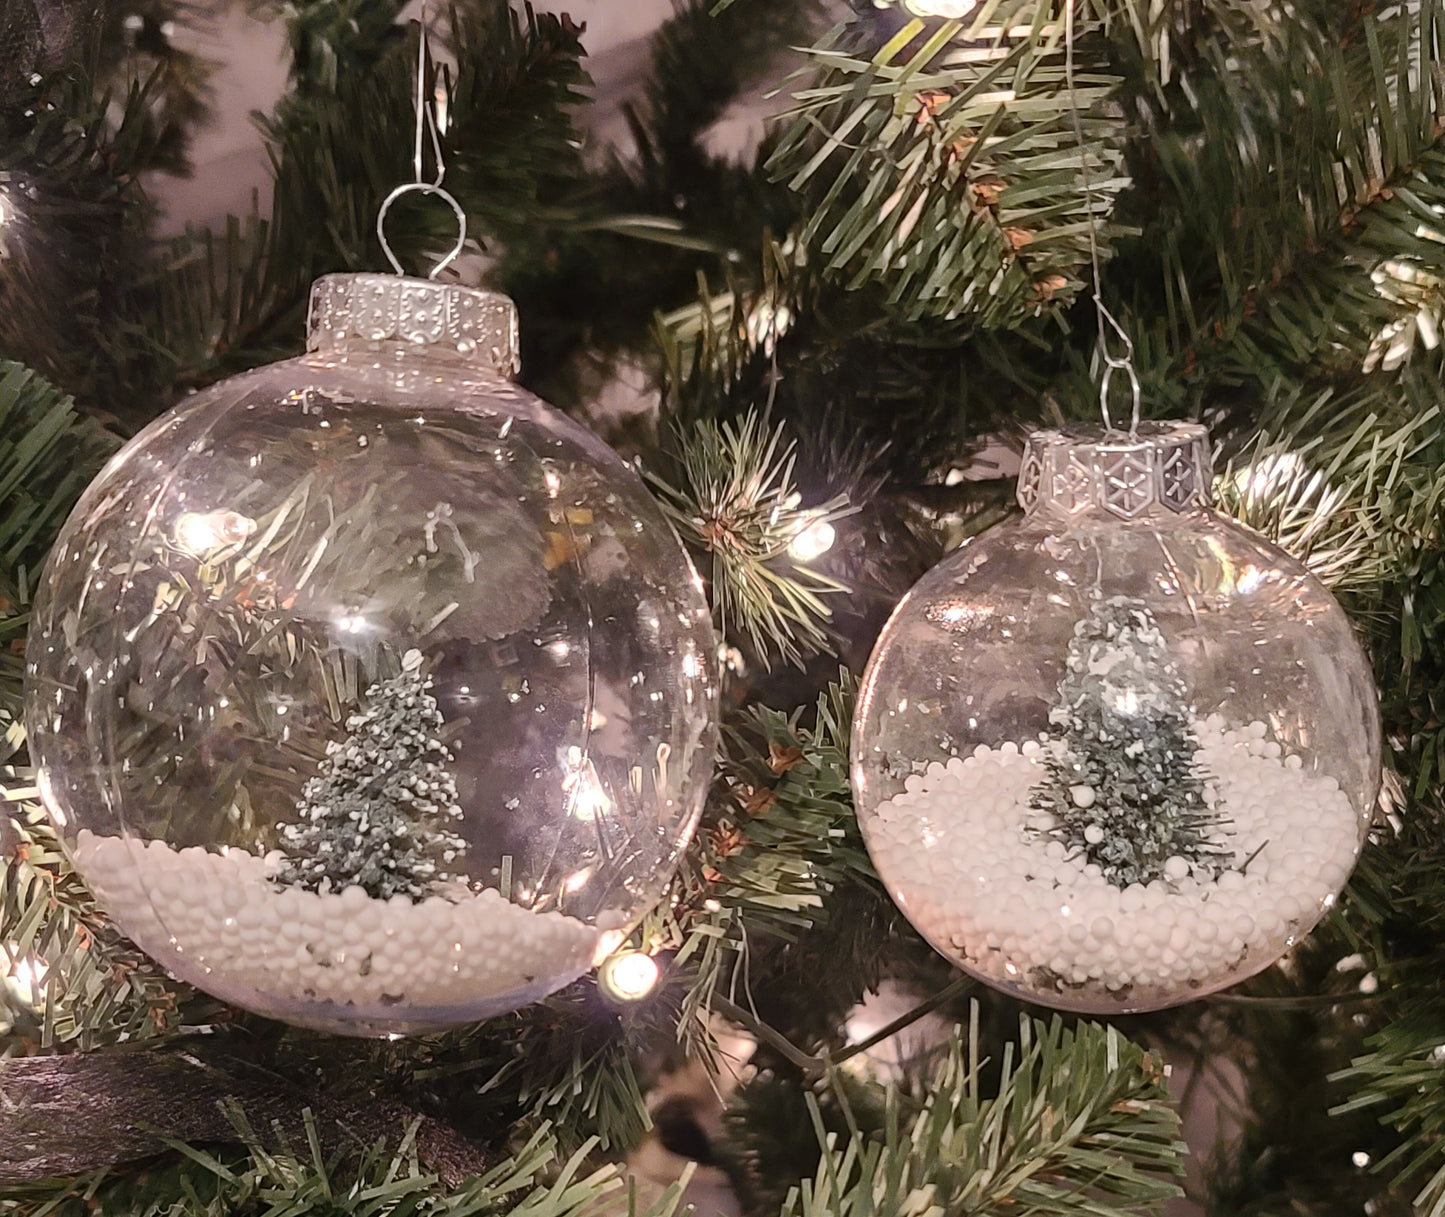 Snowy Christmas tree ornaments